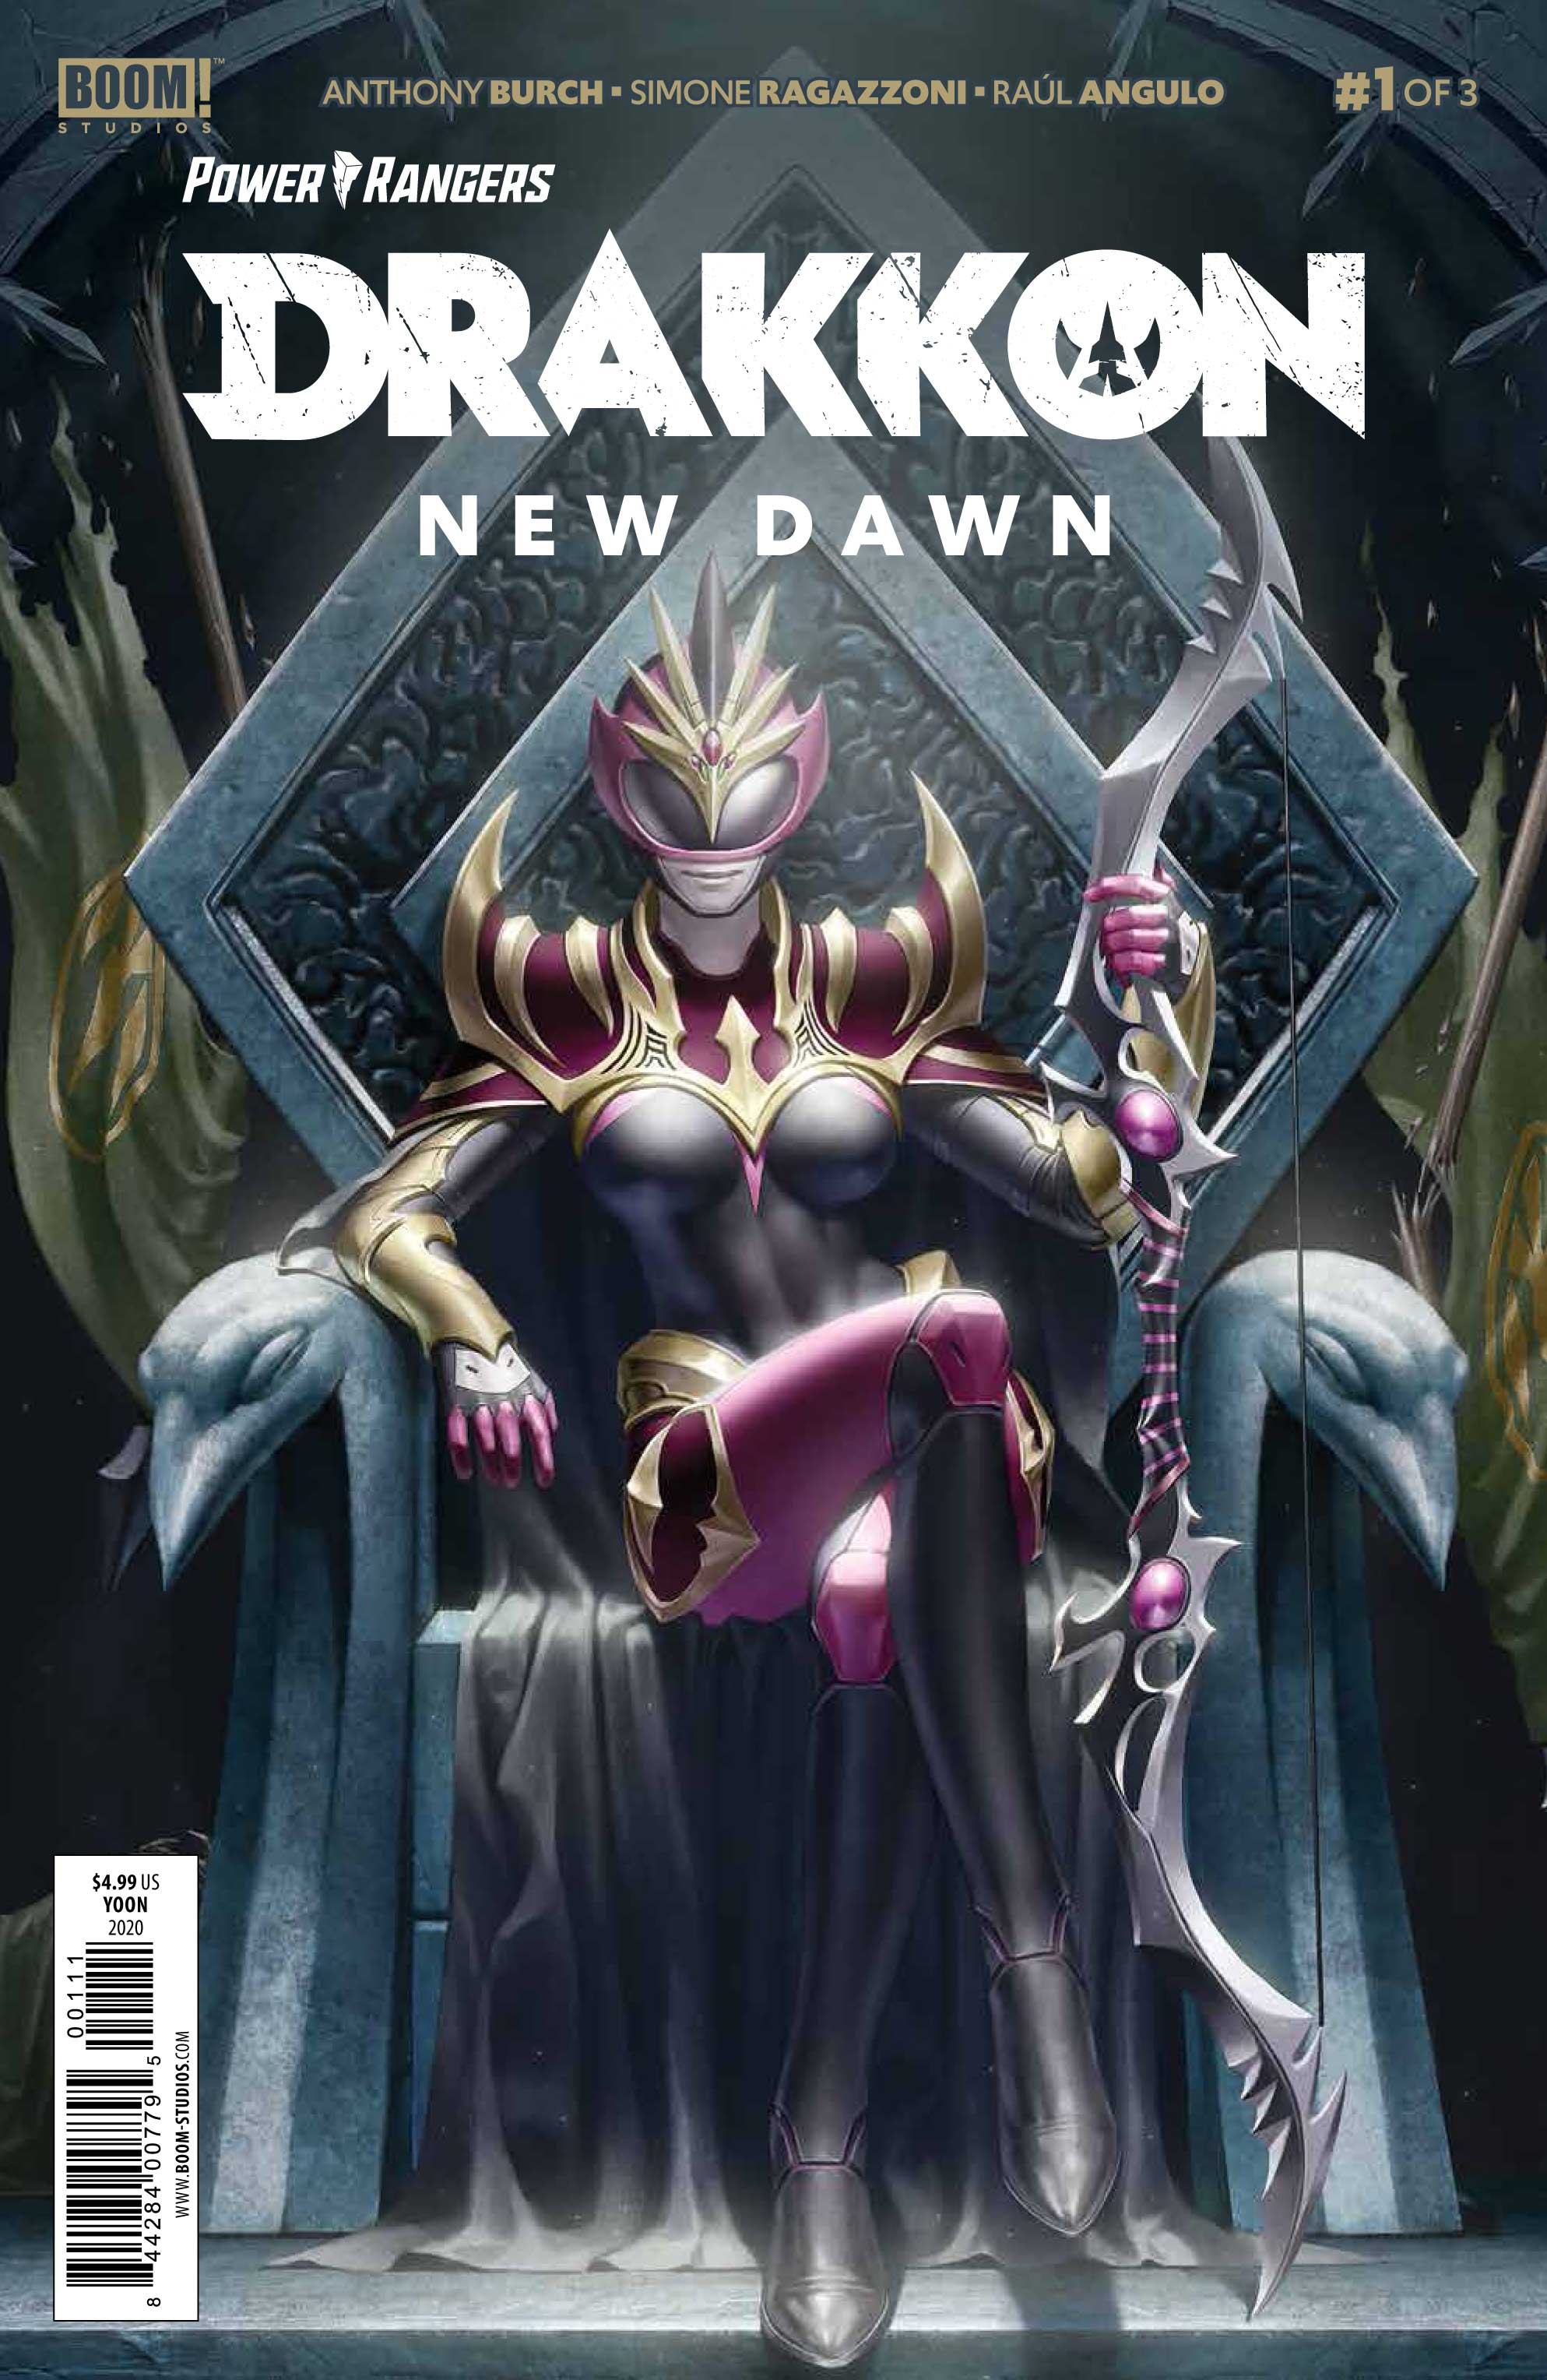 Power Rangers Drakkon New Dawn #1 Cover A Main Secret